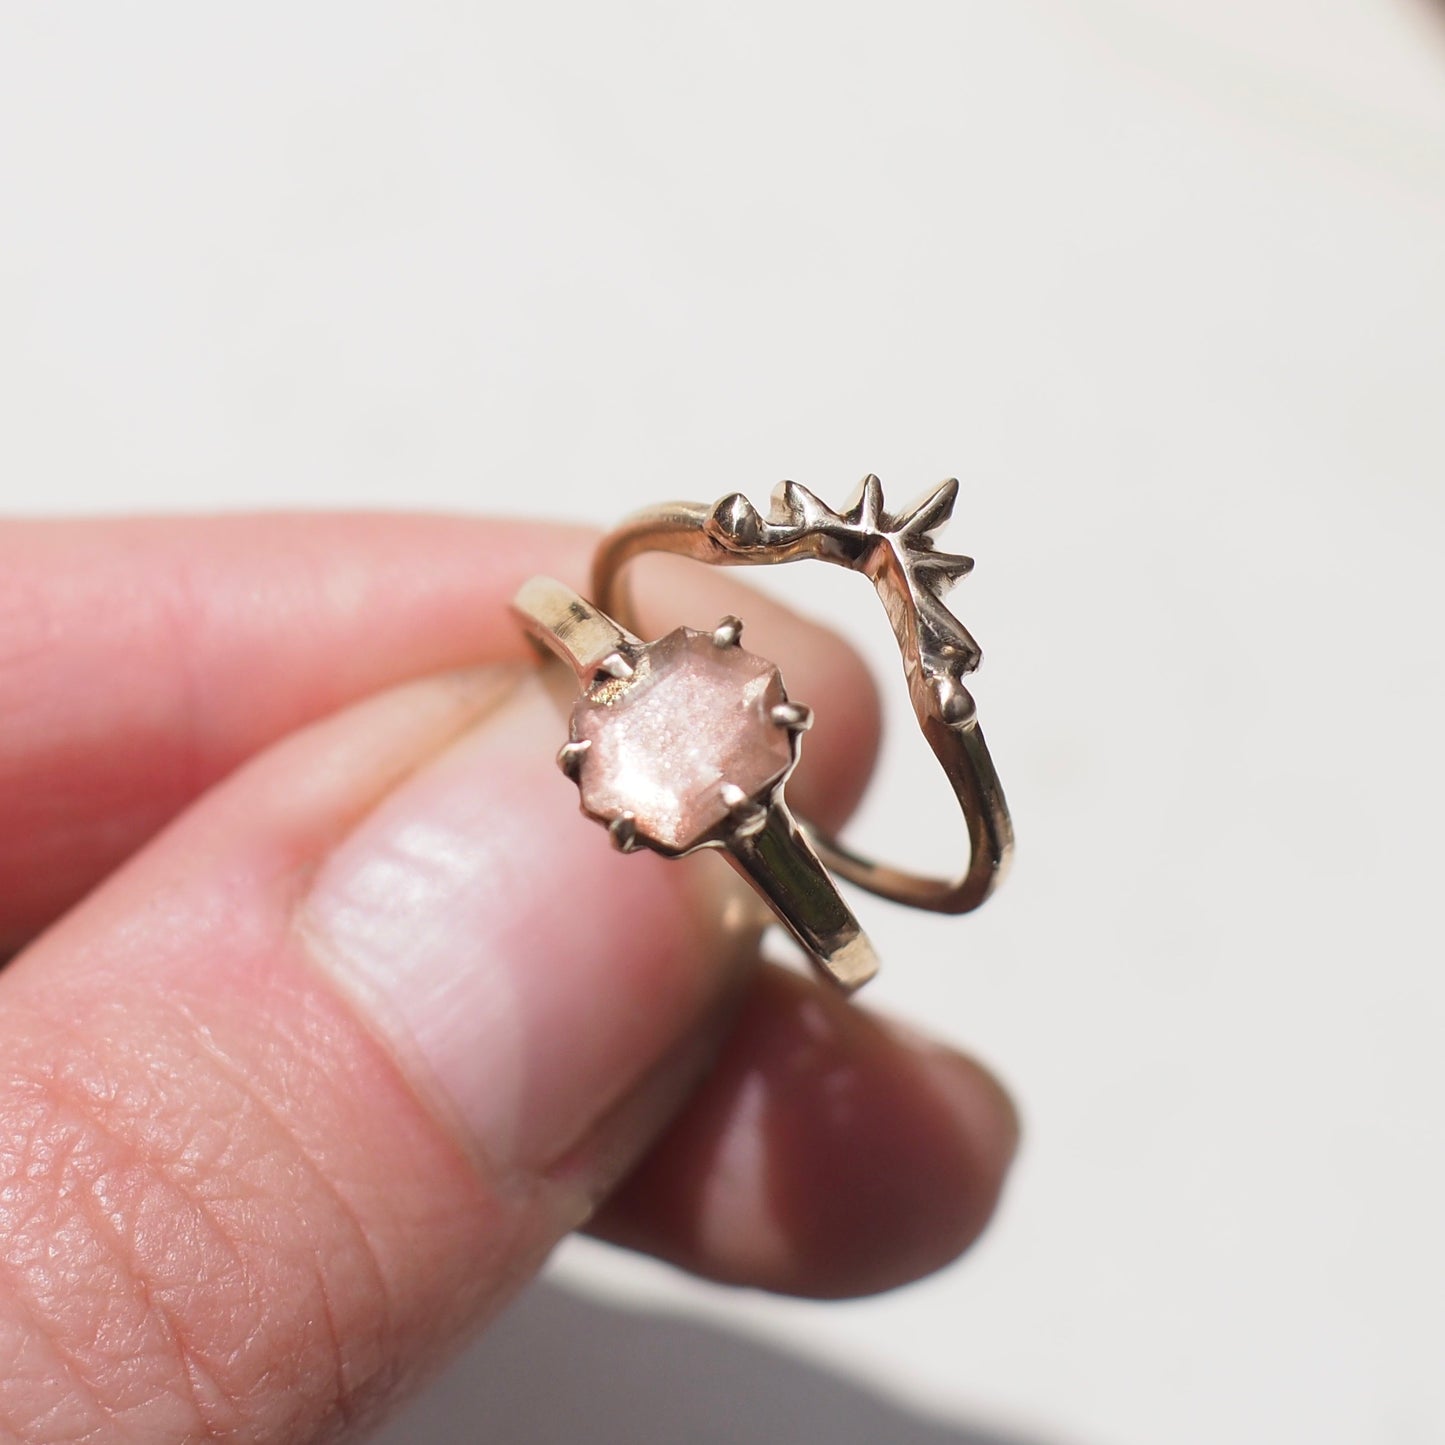 Diamond Alternative Wedding ring, sunstone hexagon ring stacked with the Sunburst nesting ring by Iron Oxide Designs